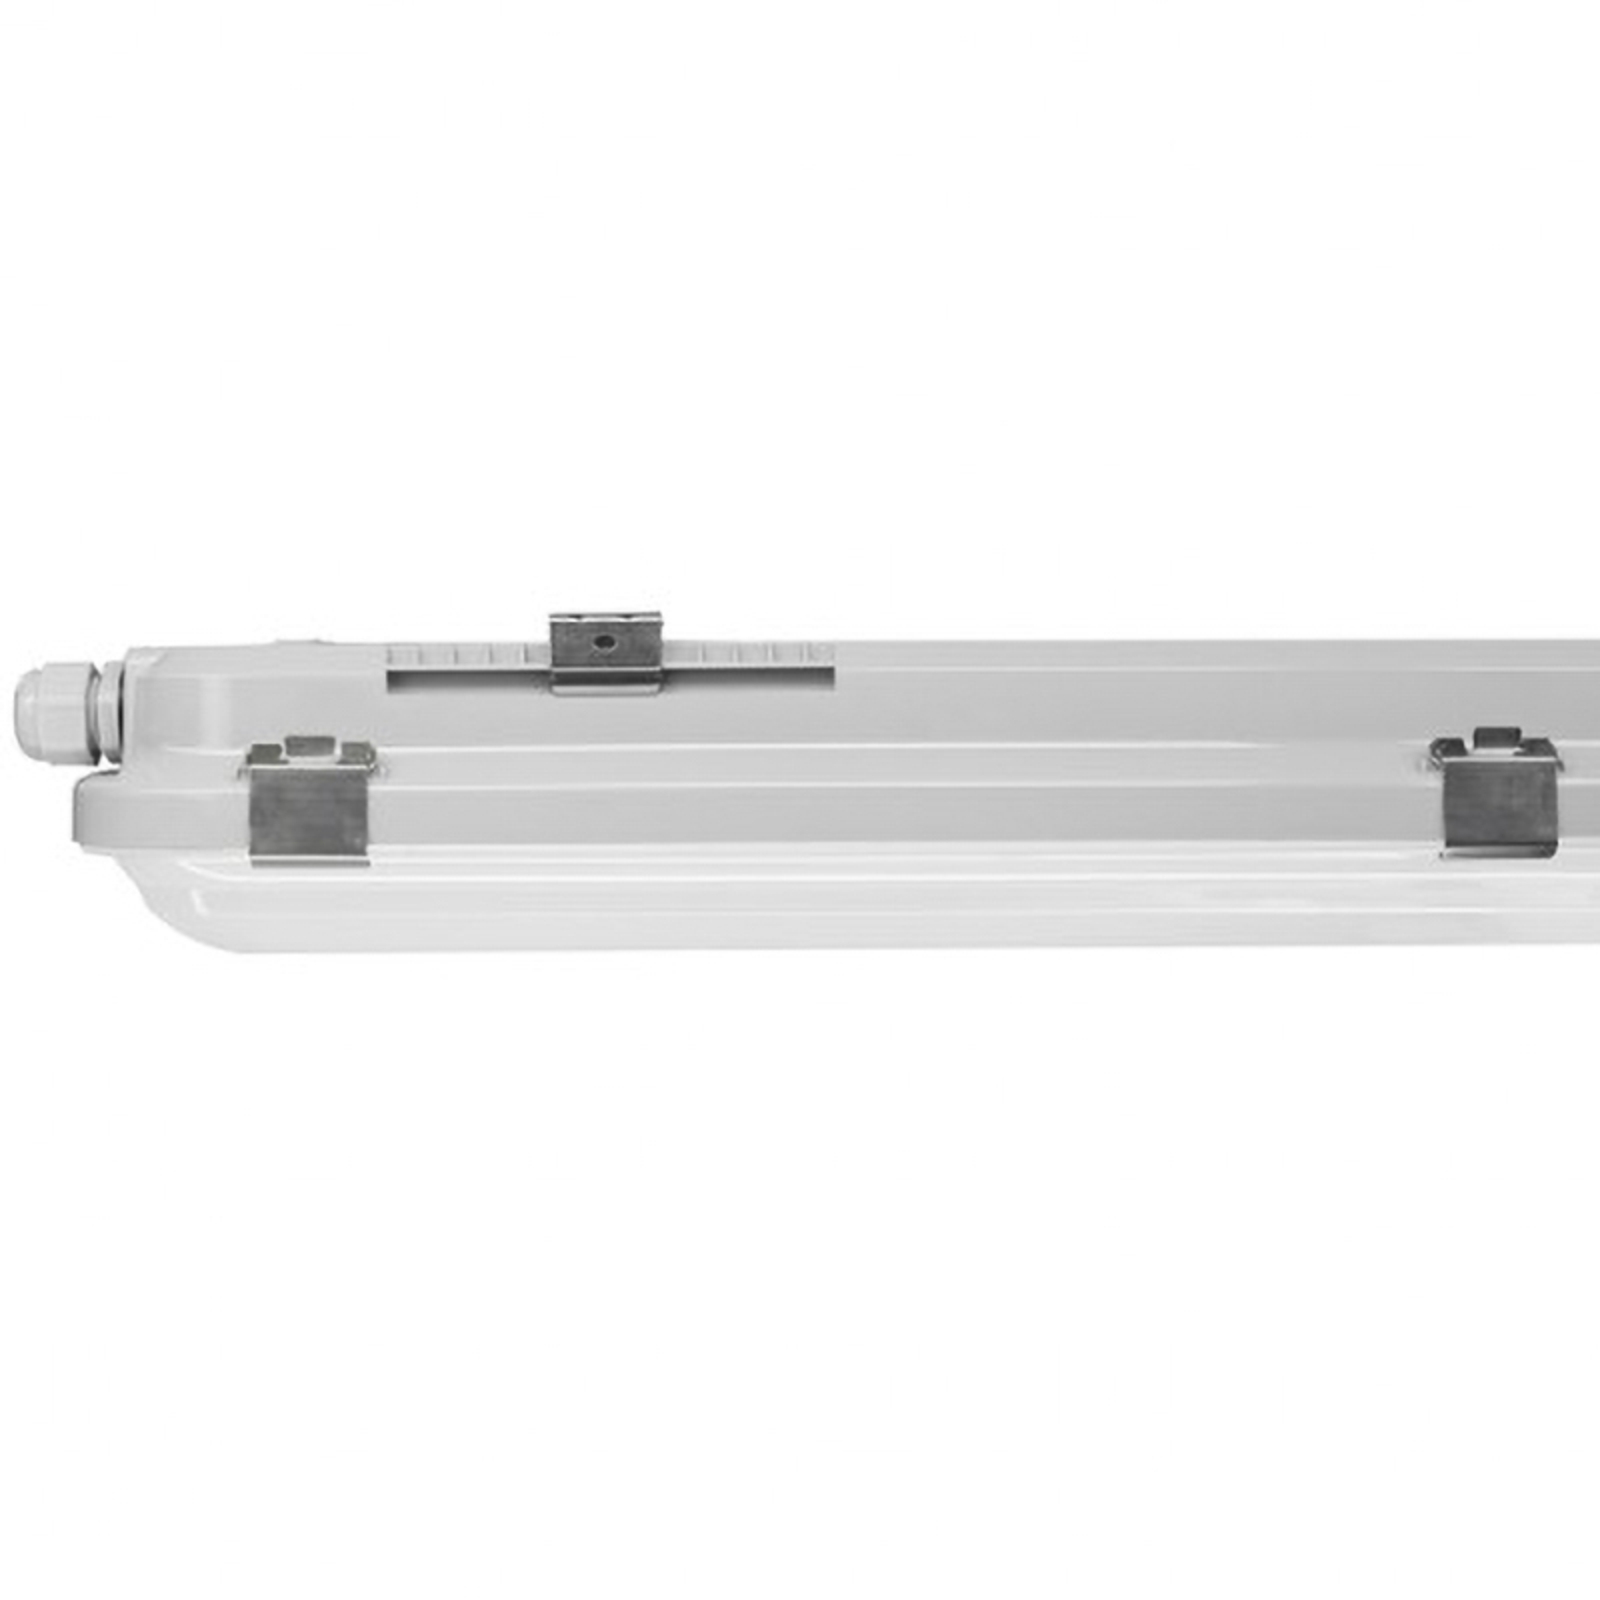 InnoGreen AQUOS 3.0 BASELine luminaire LED 152cm 850